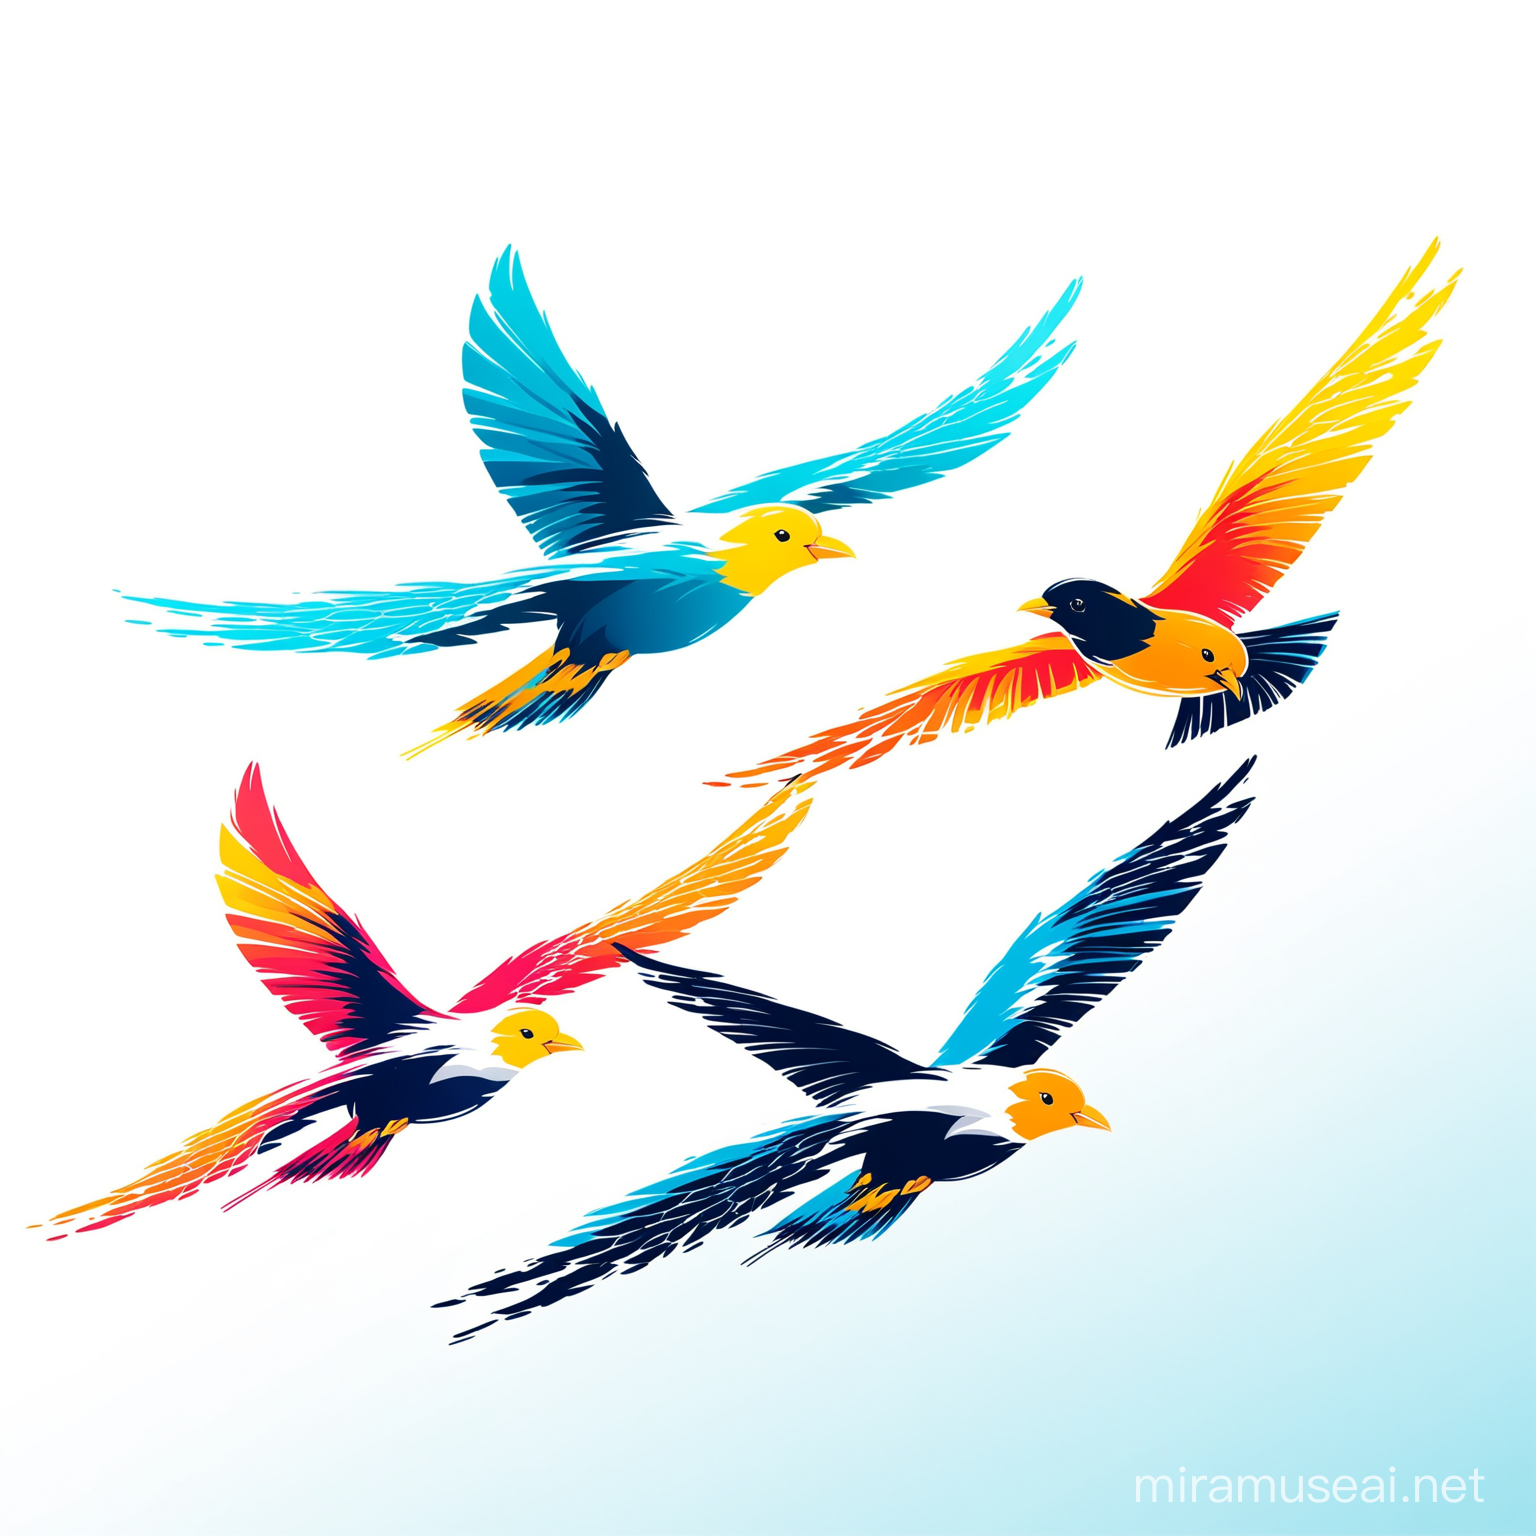 HighSpeed Digital Bird Logo in Three Colors on White Background